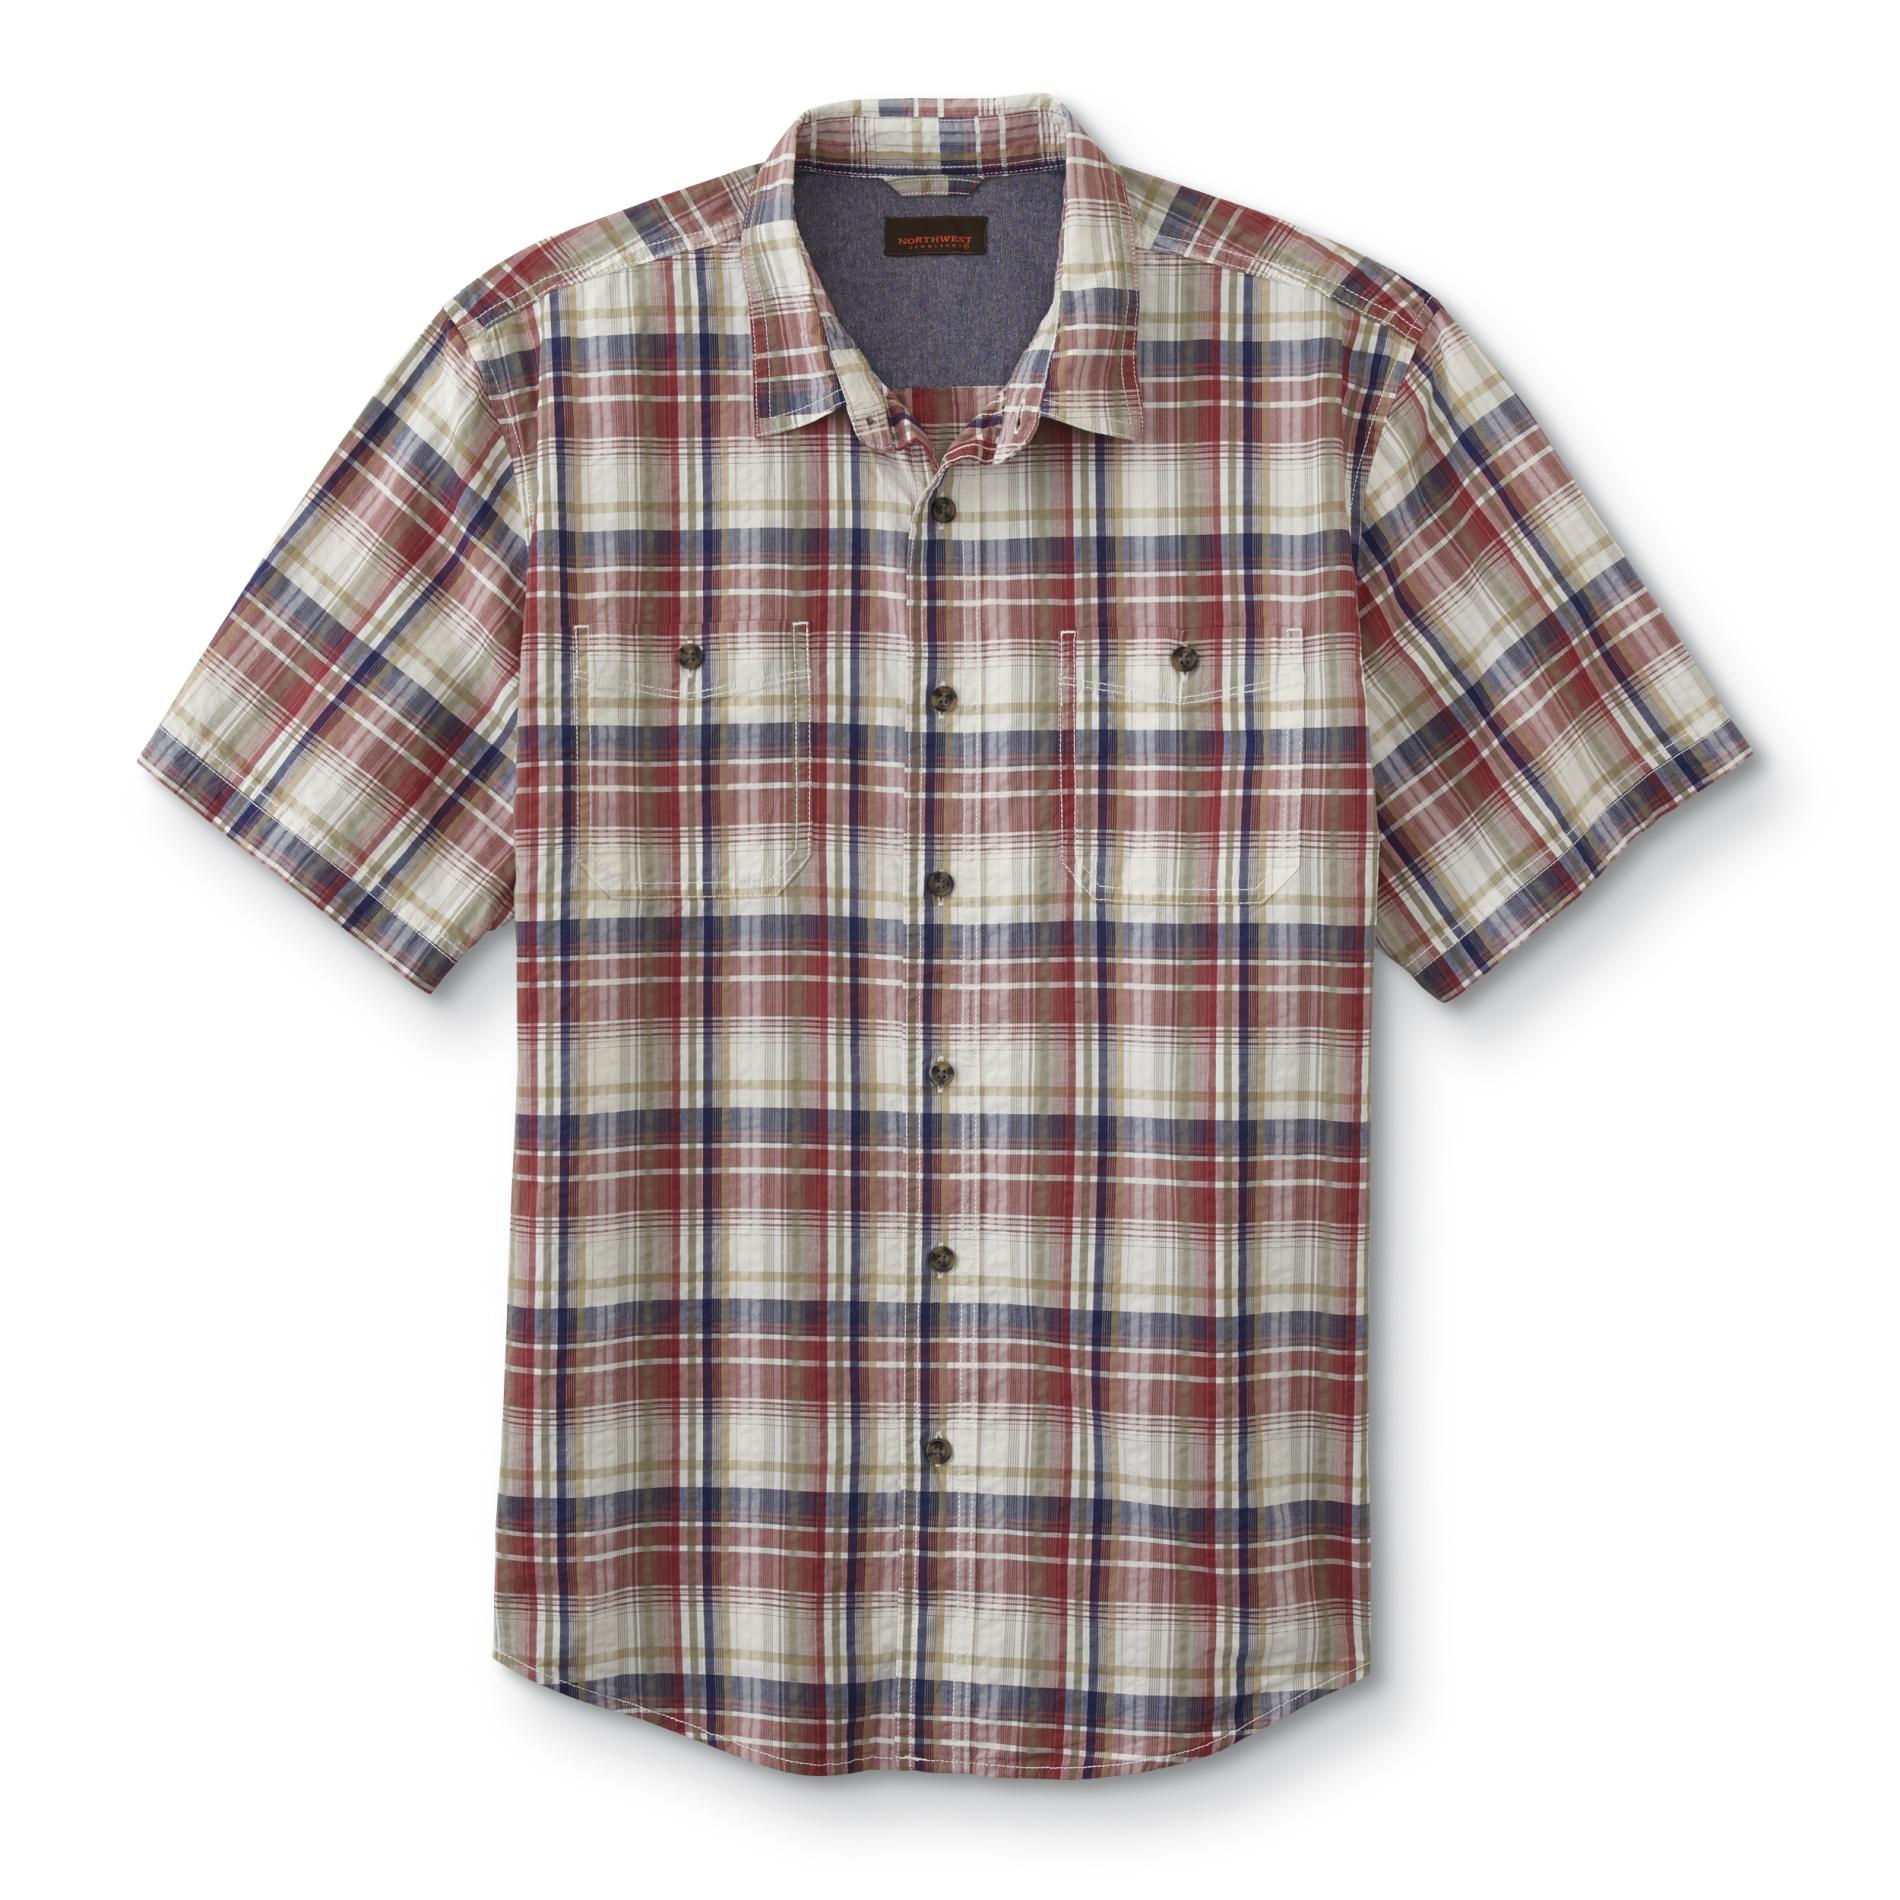 Northwest Territory Men's Button-Front Shirt - Plaid